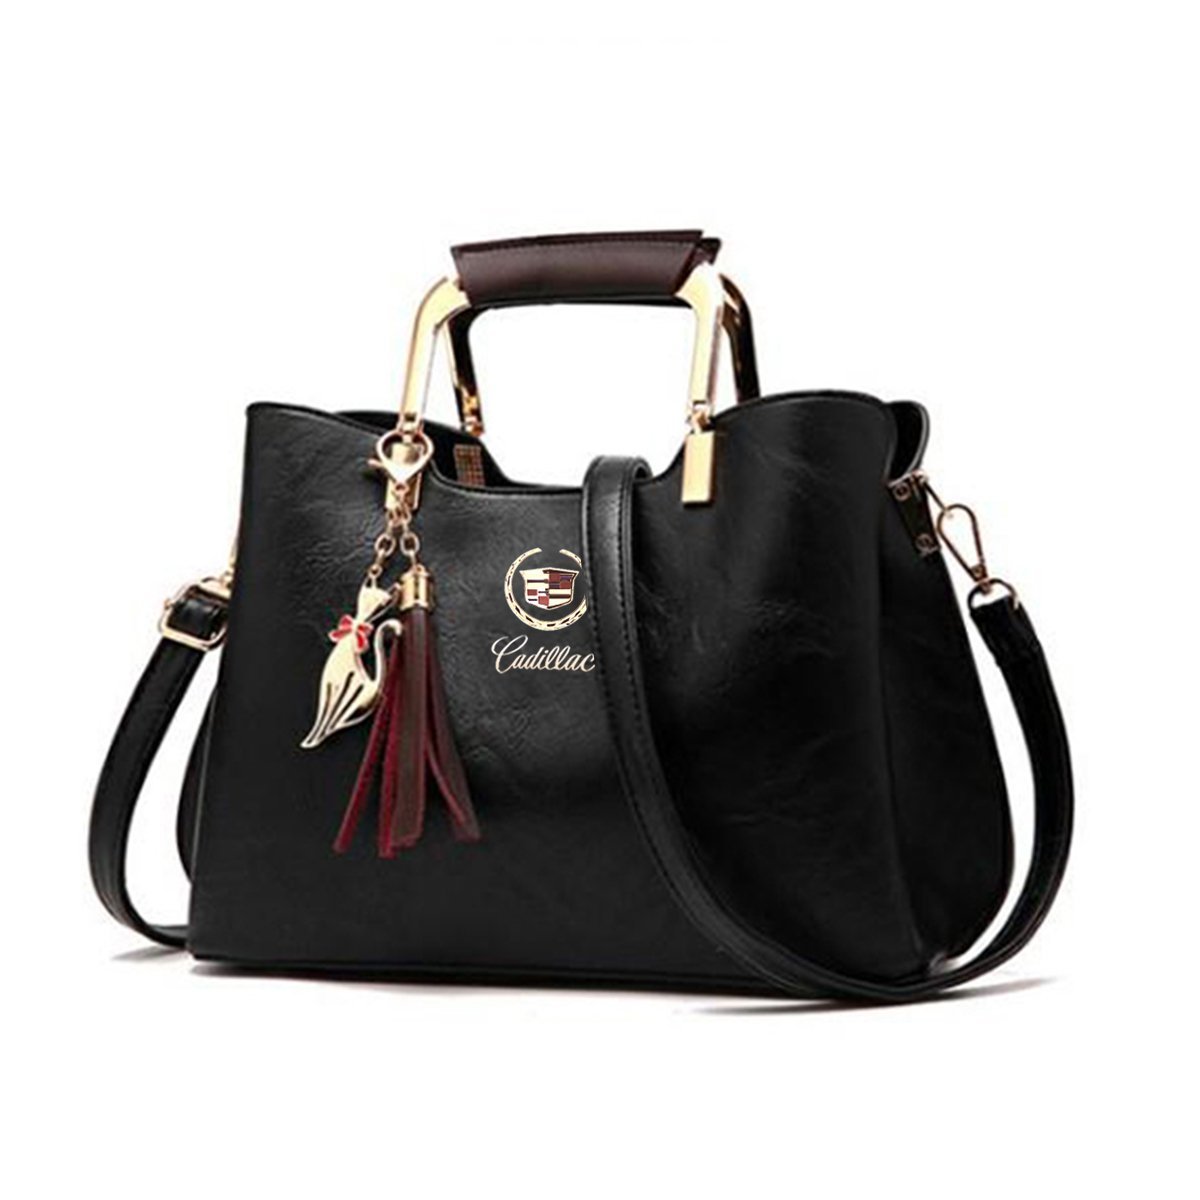 Chain Strap Push-Lock Shoulder Bag, Burgundy, hi-res | Trendy purses, Bags,  Leather bag design